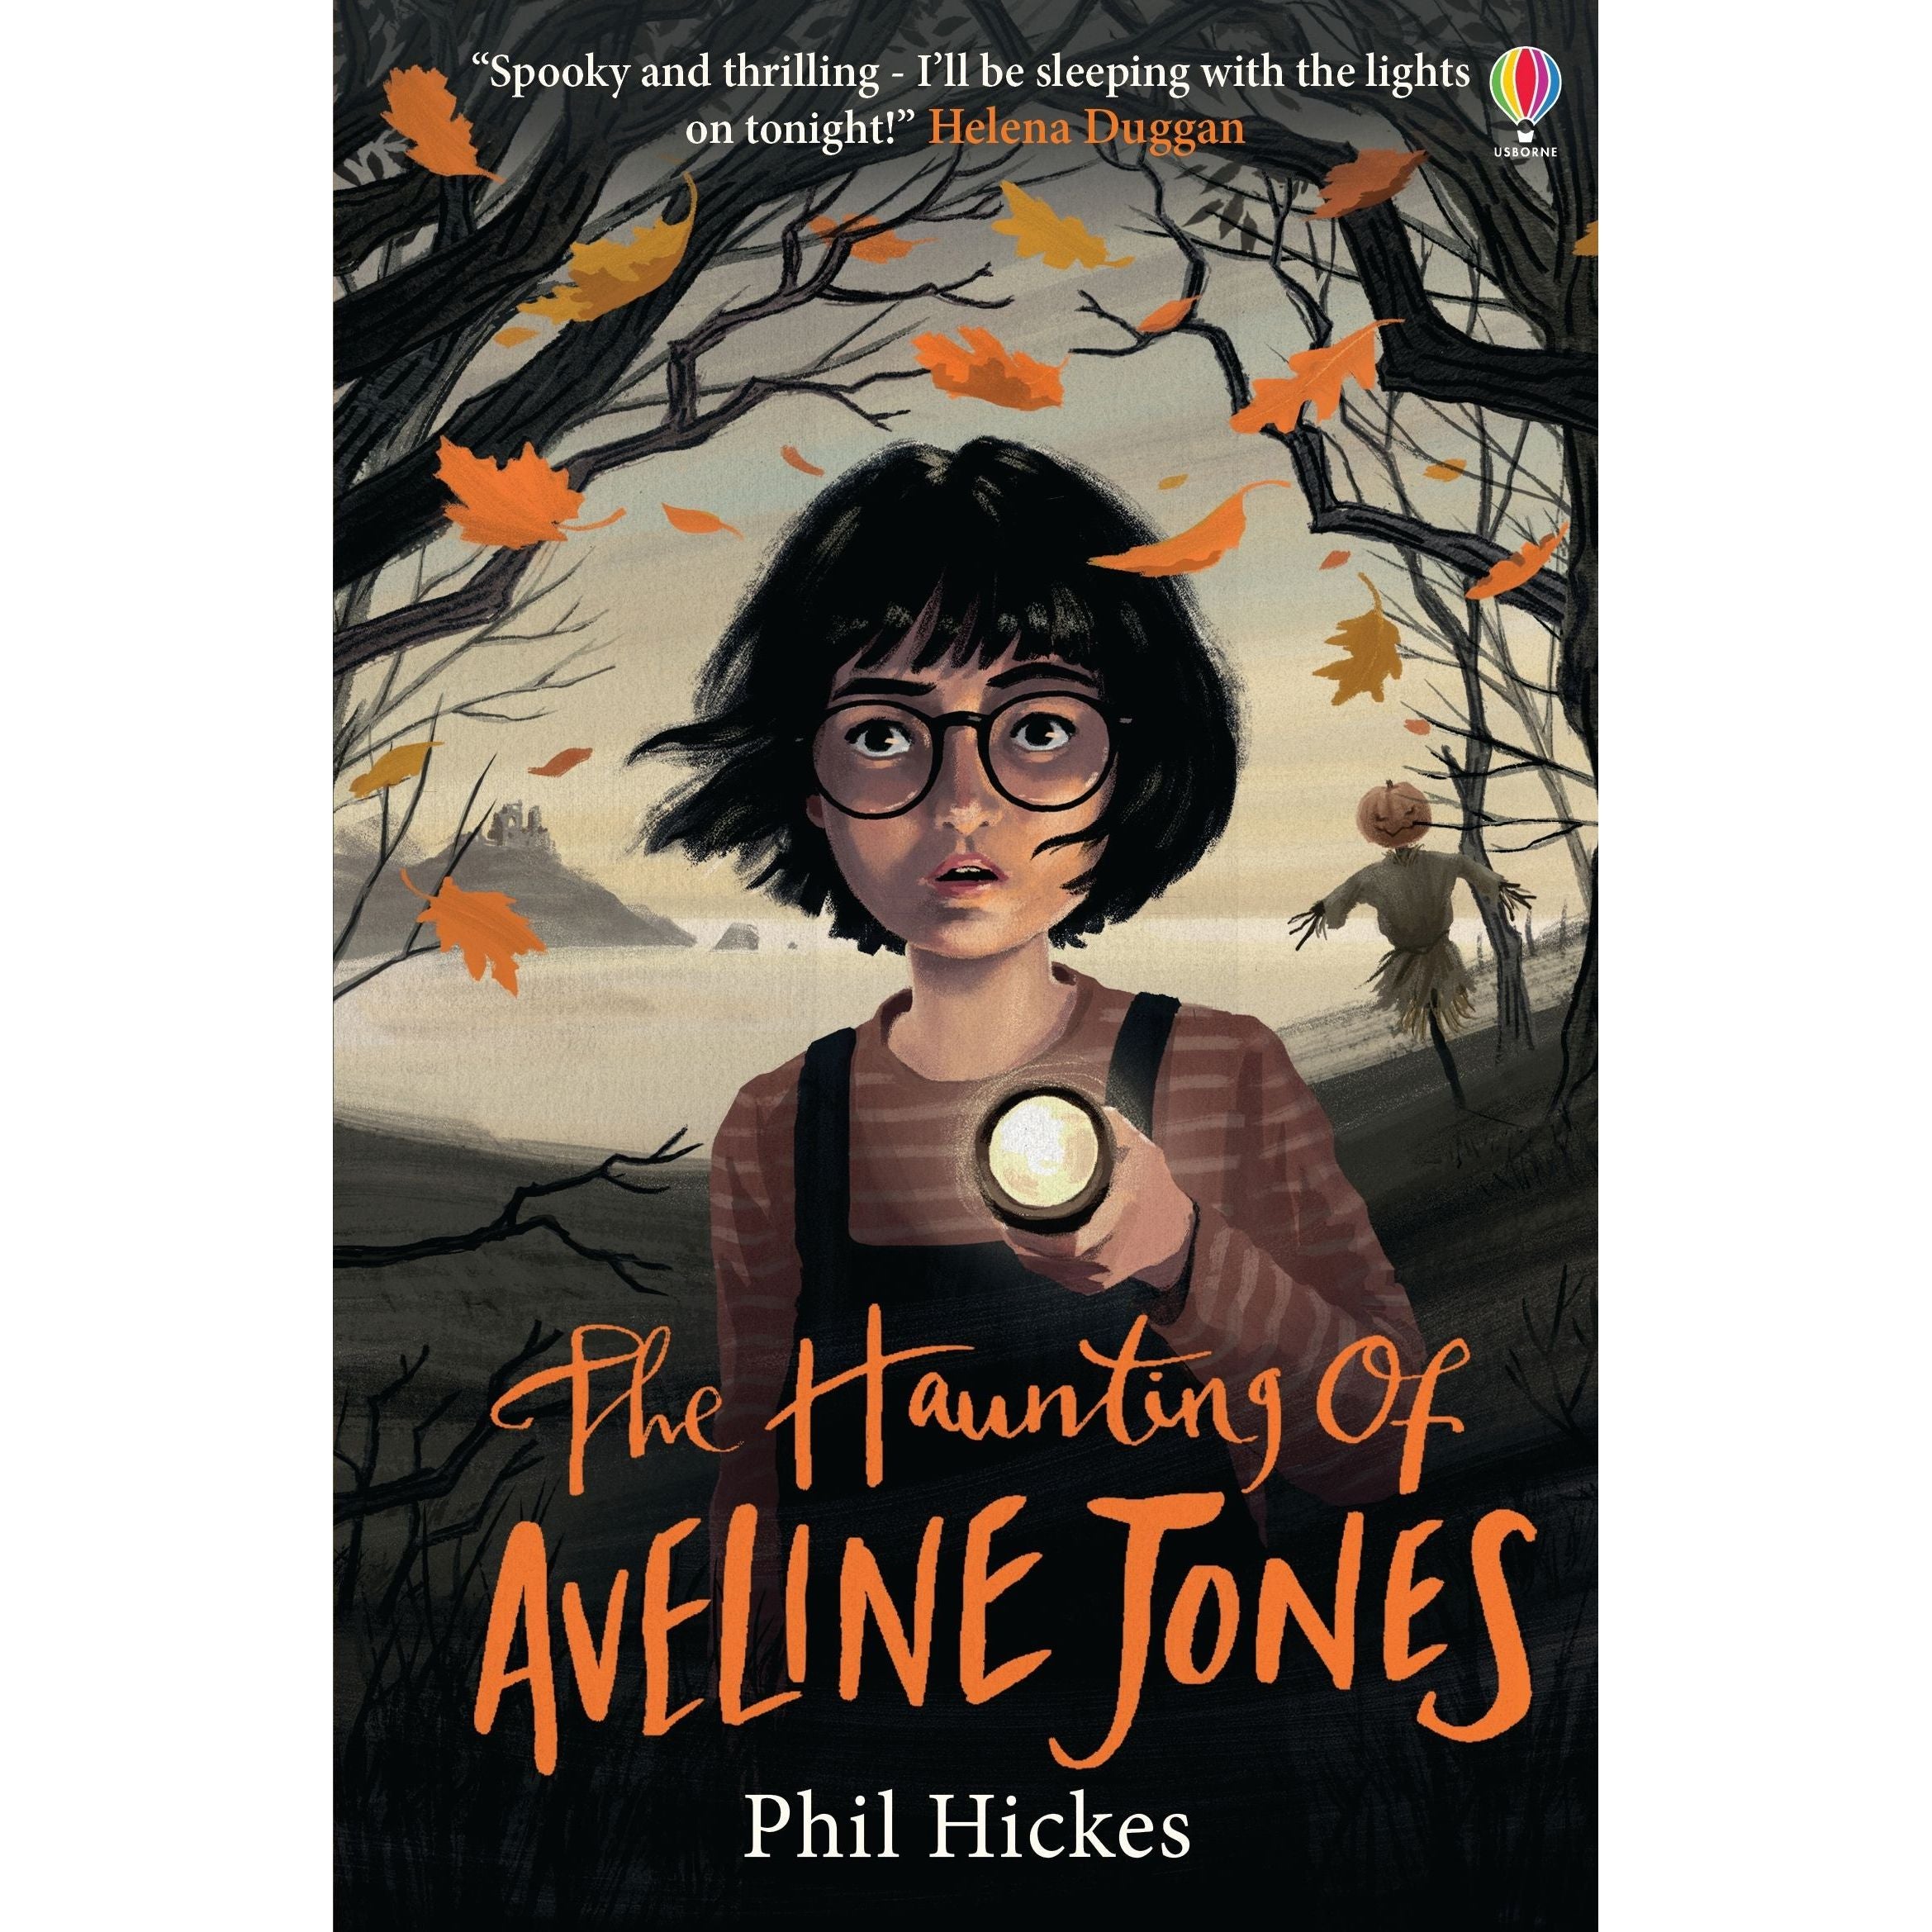 The Haunting Of Aveline Jones - Phil Hicks